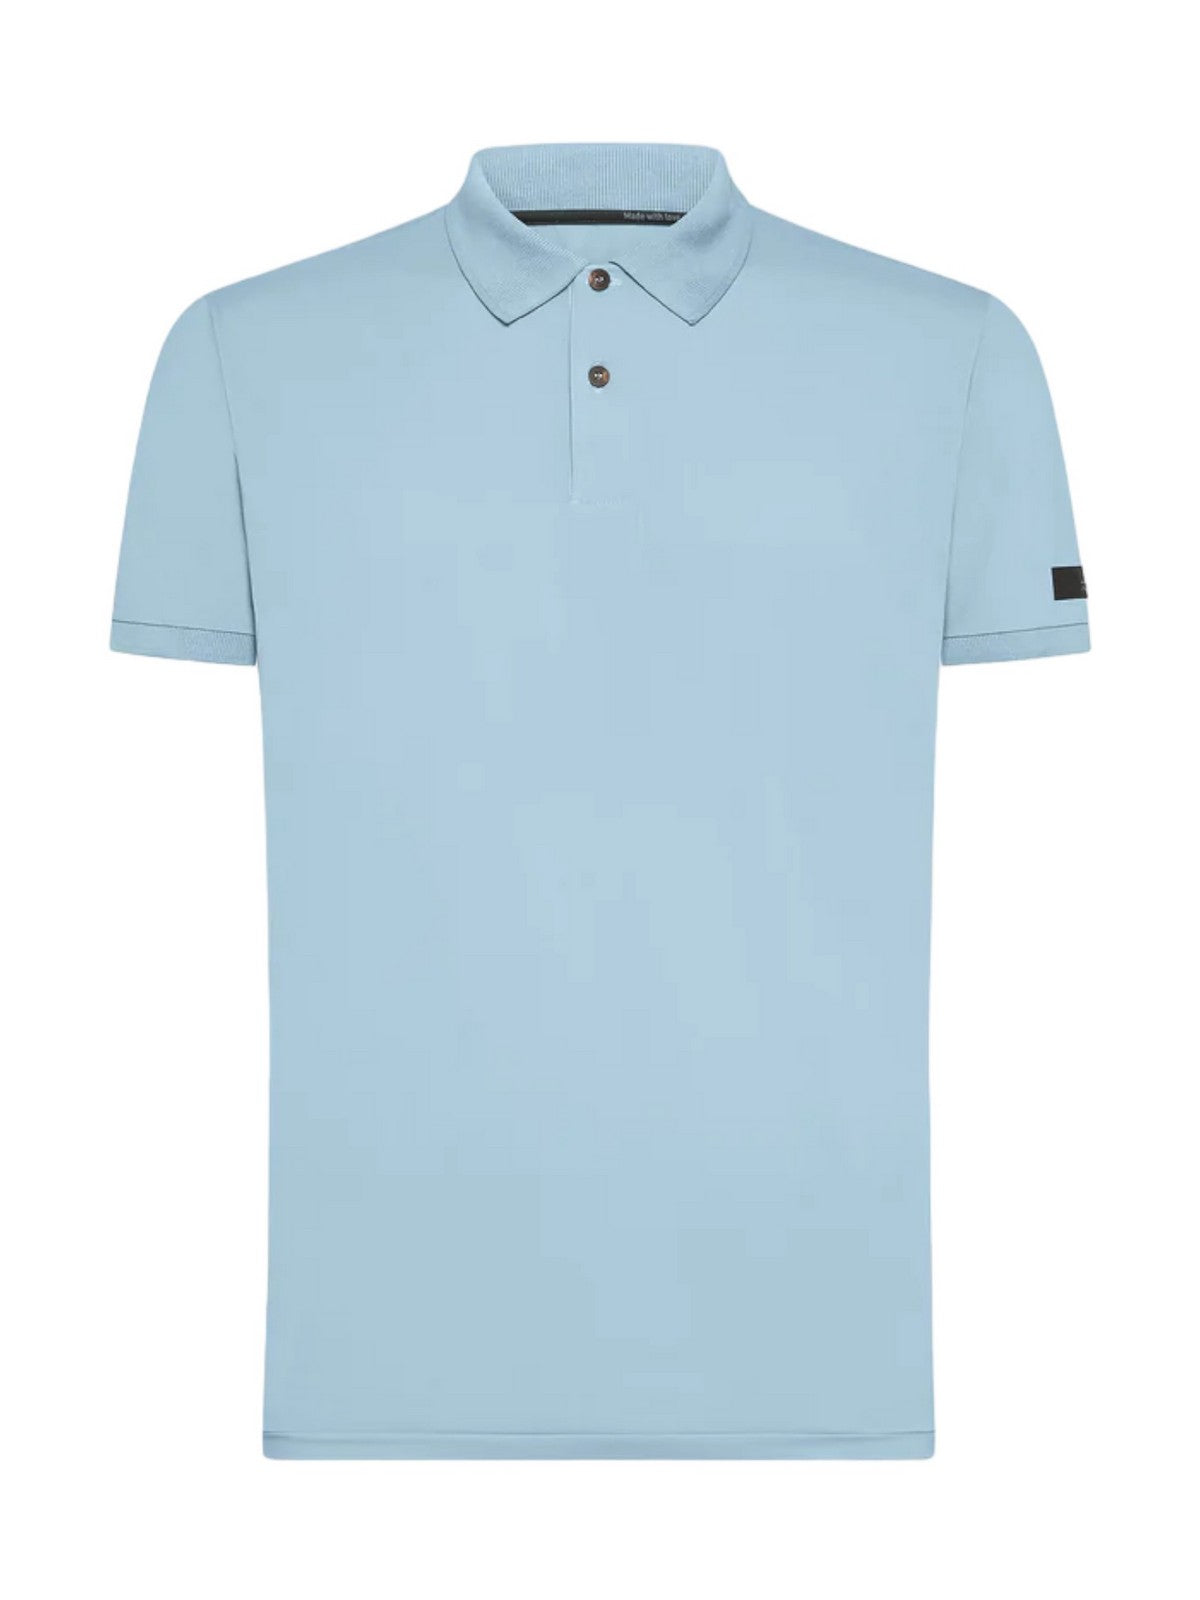 RRD T-Shirt e Polo Uomo  24210 64 Blu